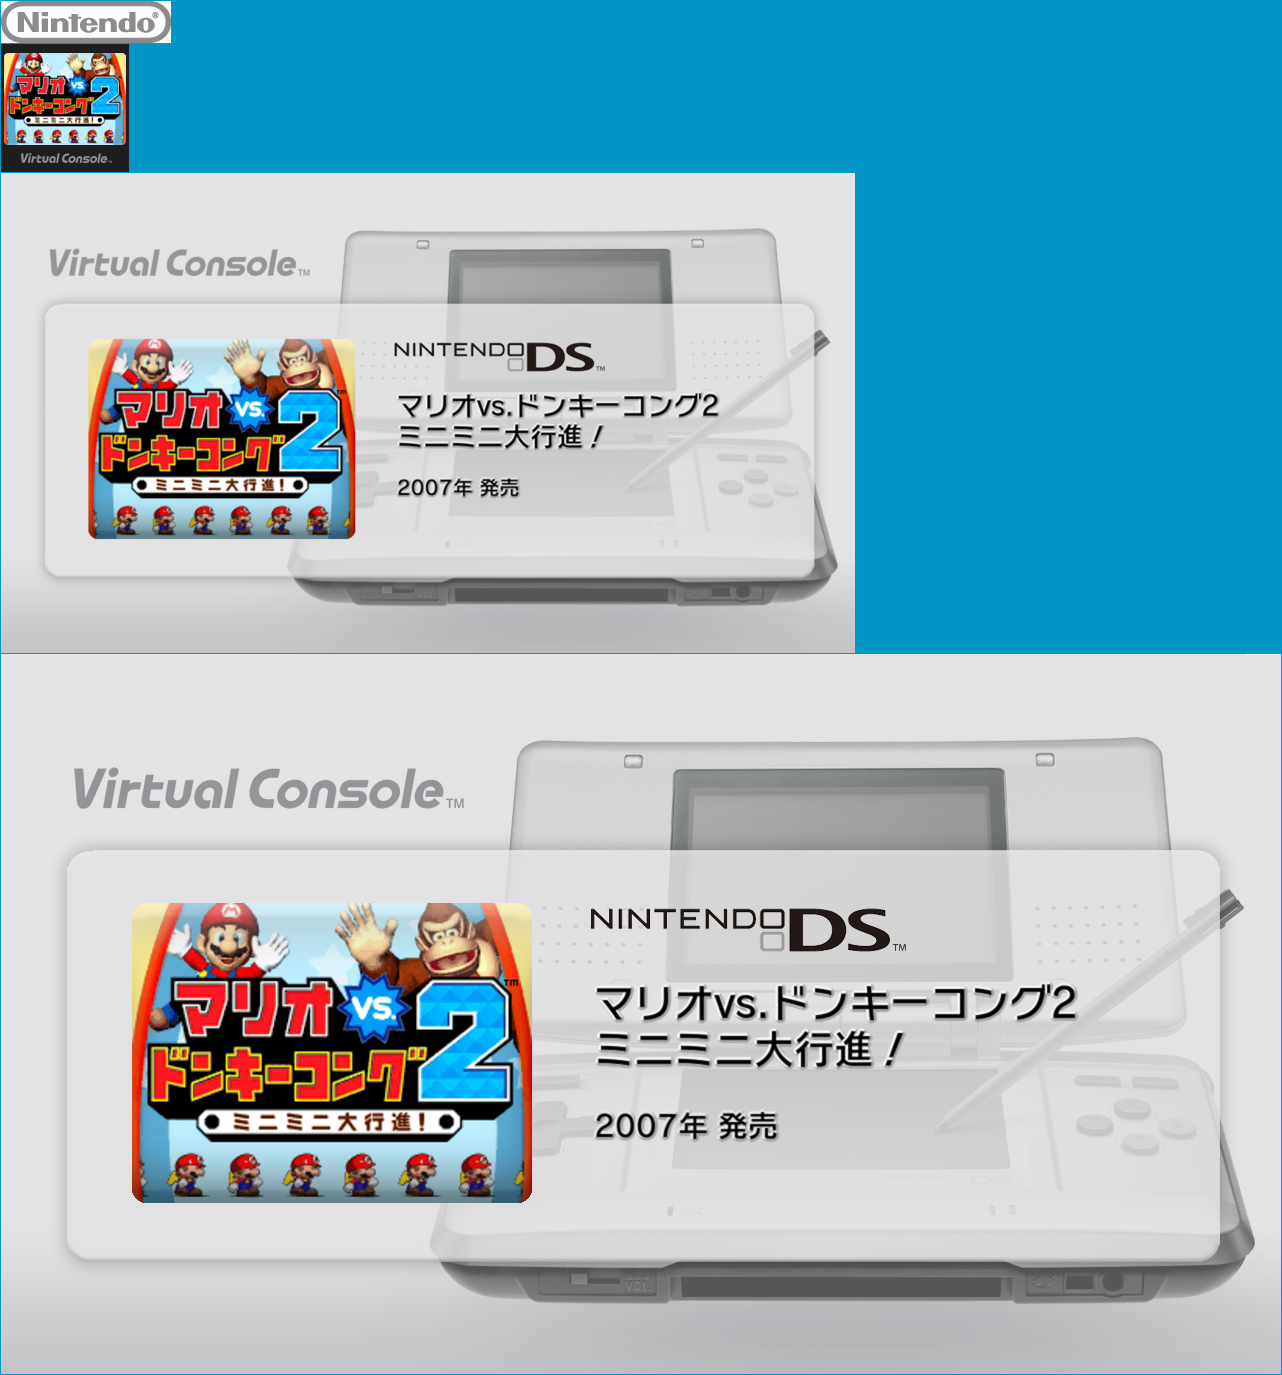 Virtual Console - Mario vs. Donkey Kong 2: Mini Mini dai Kōshin!